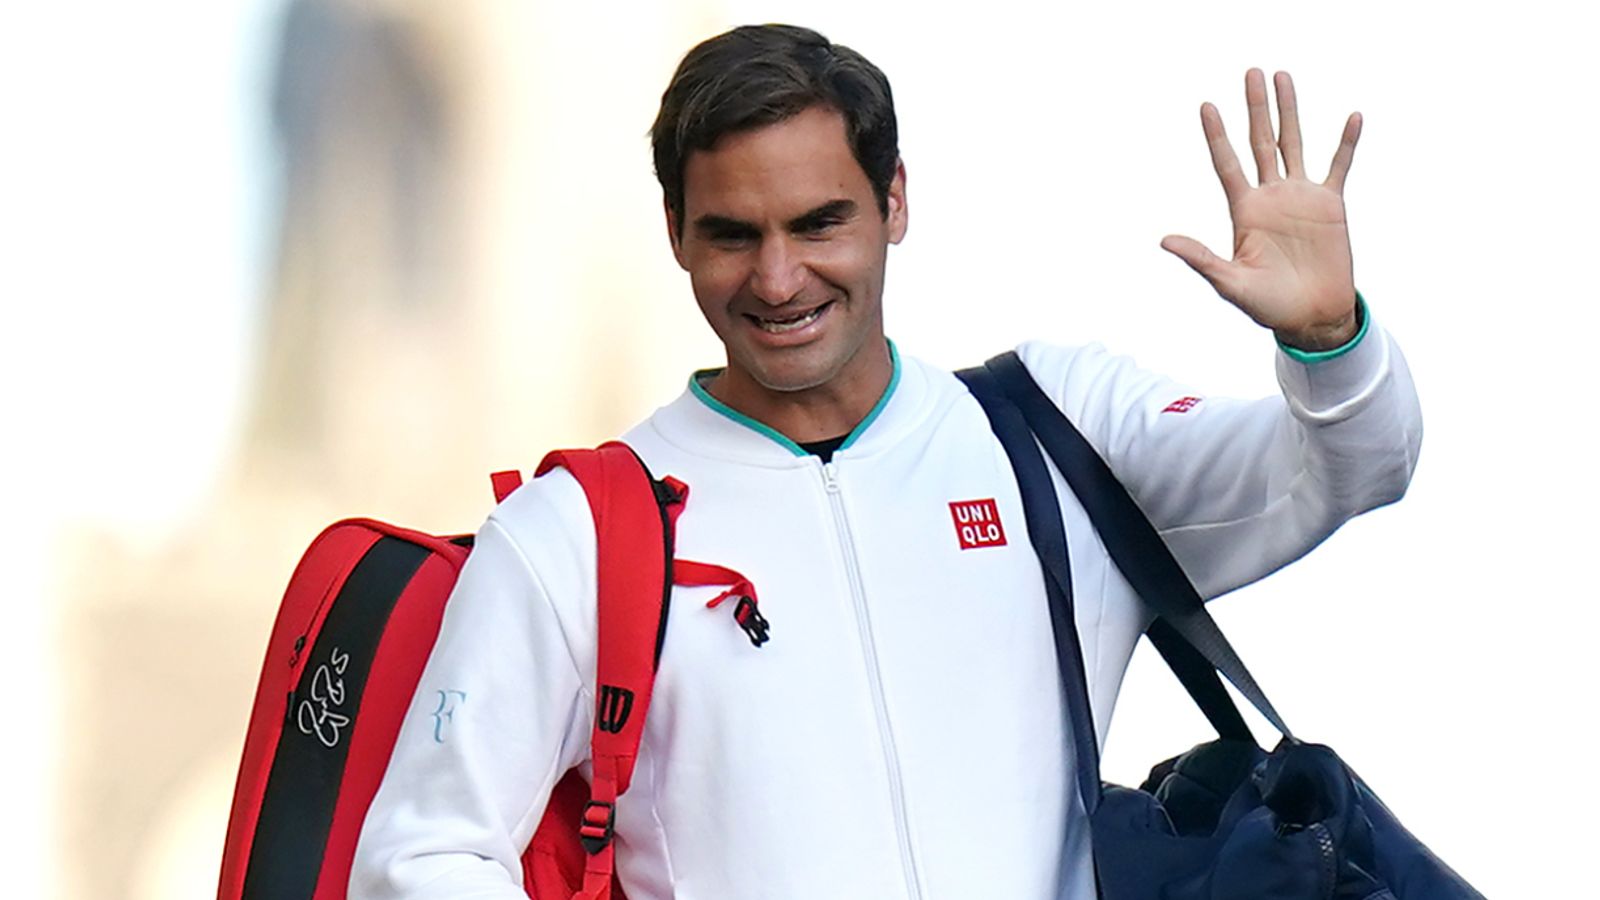 Tennis champion Roger Federer announces retirement after winning 20 Grand Slams